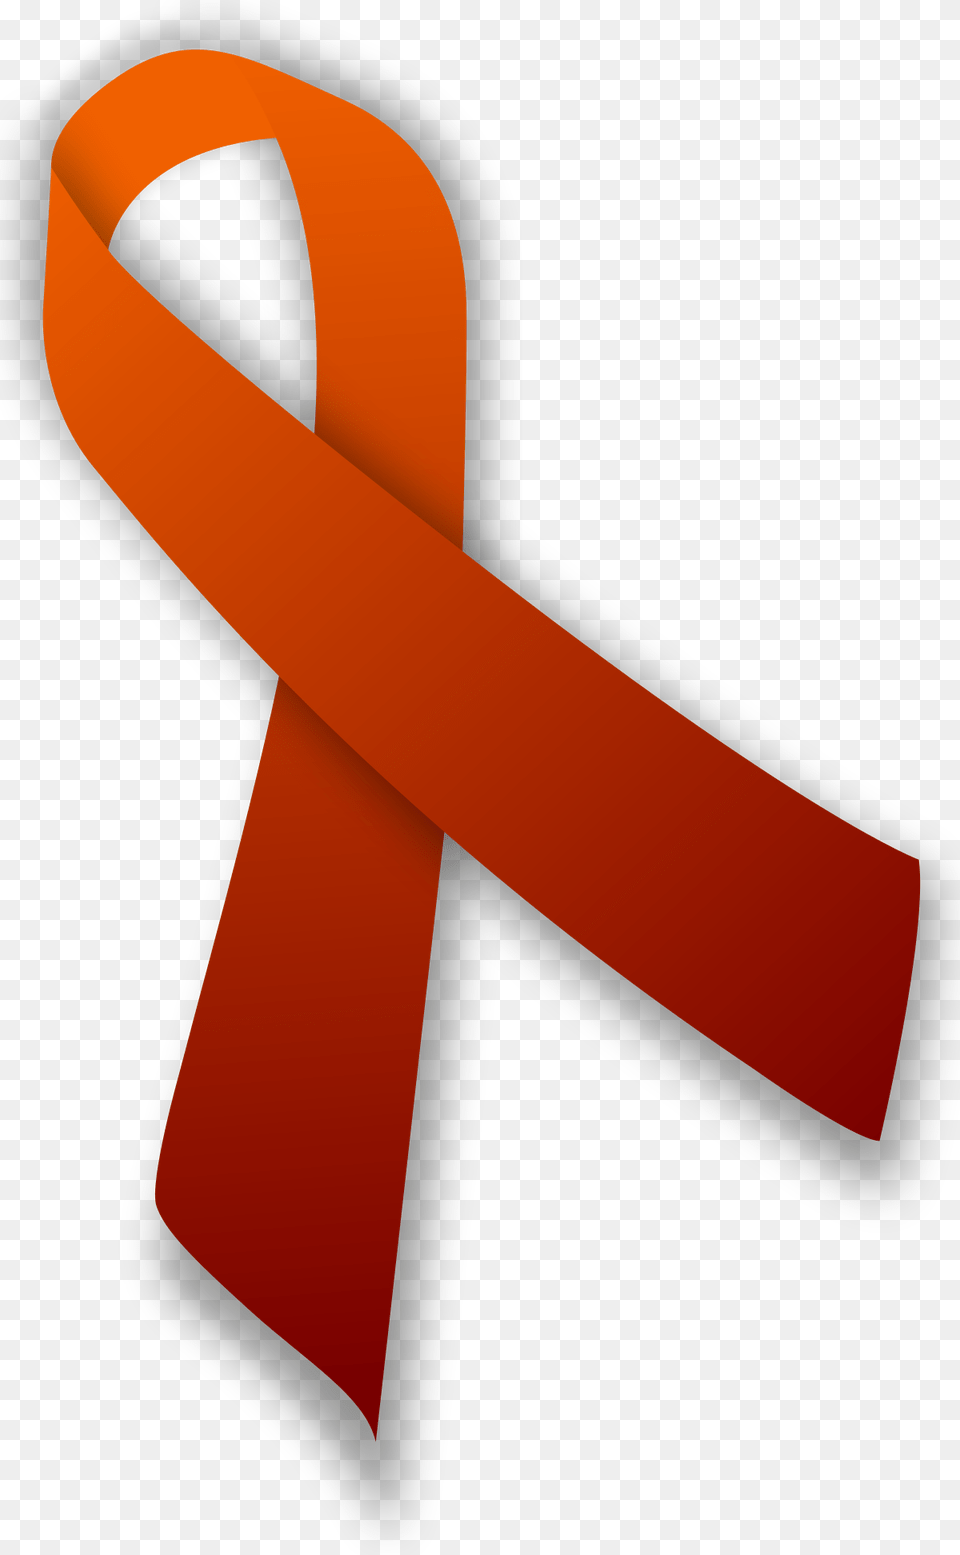 Blood Cancer Awareness Symbol, Accessories, Formal Wear, Tie, Belt Png